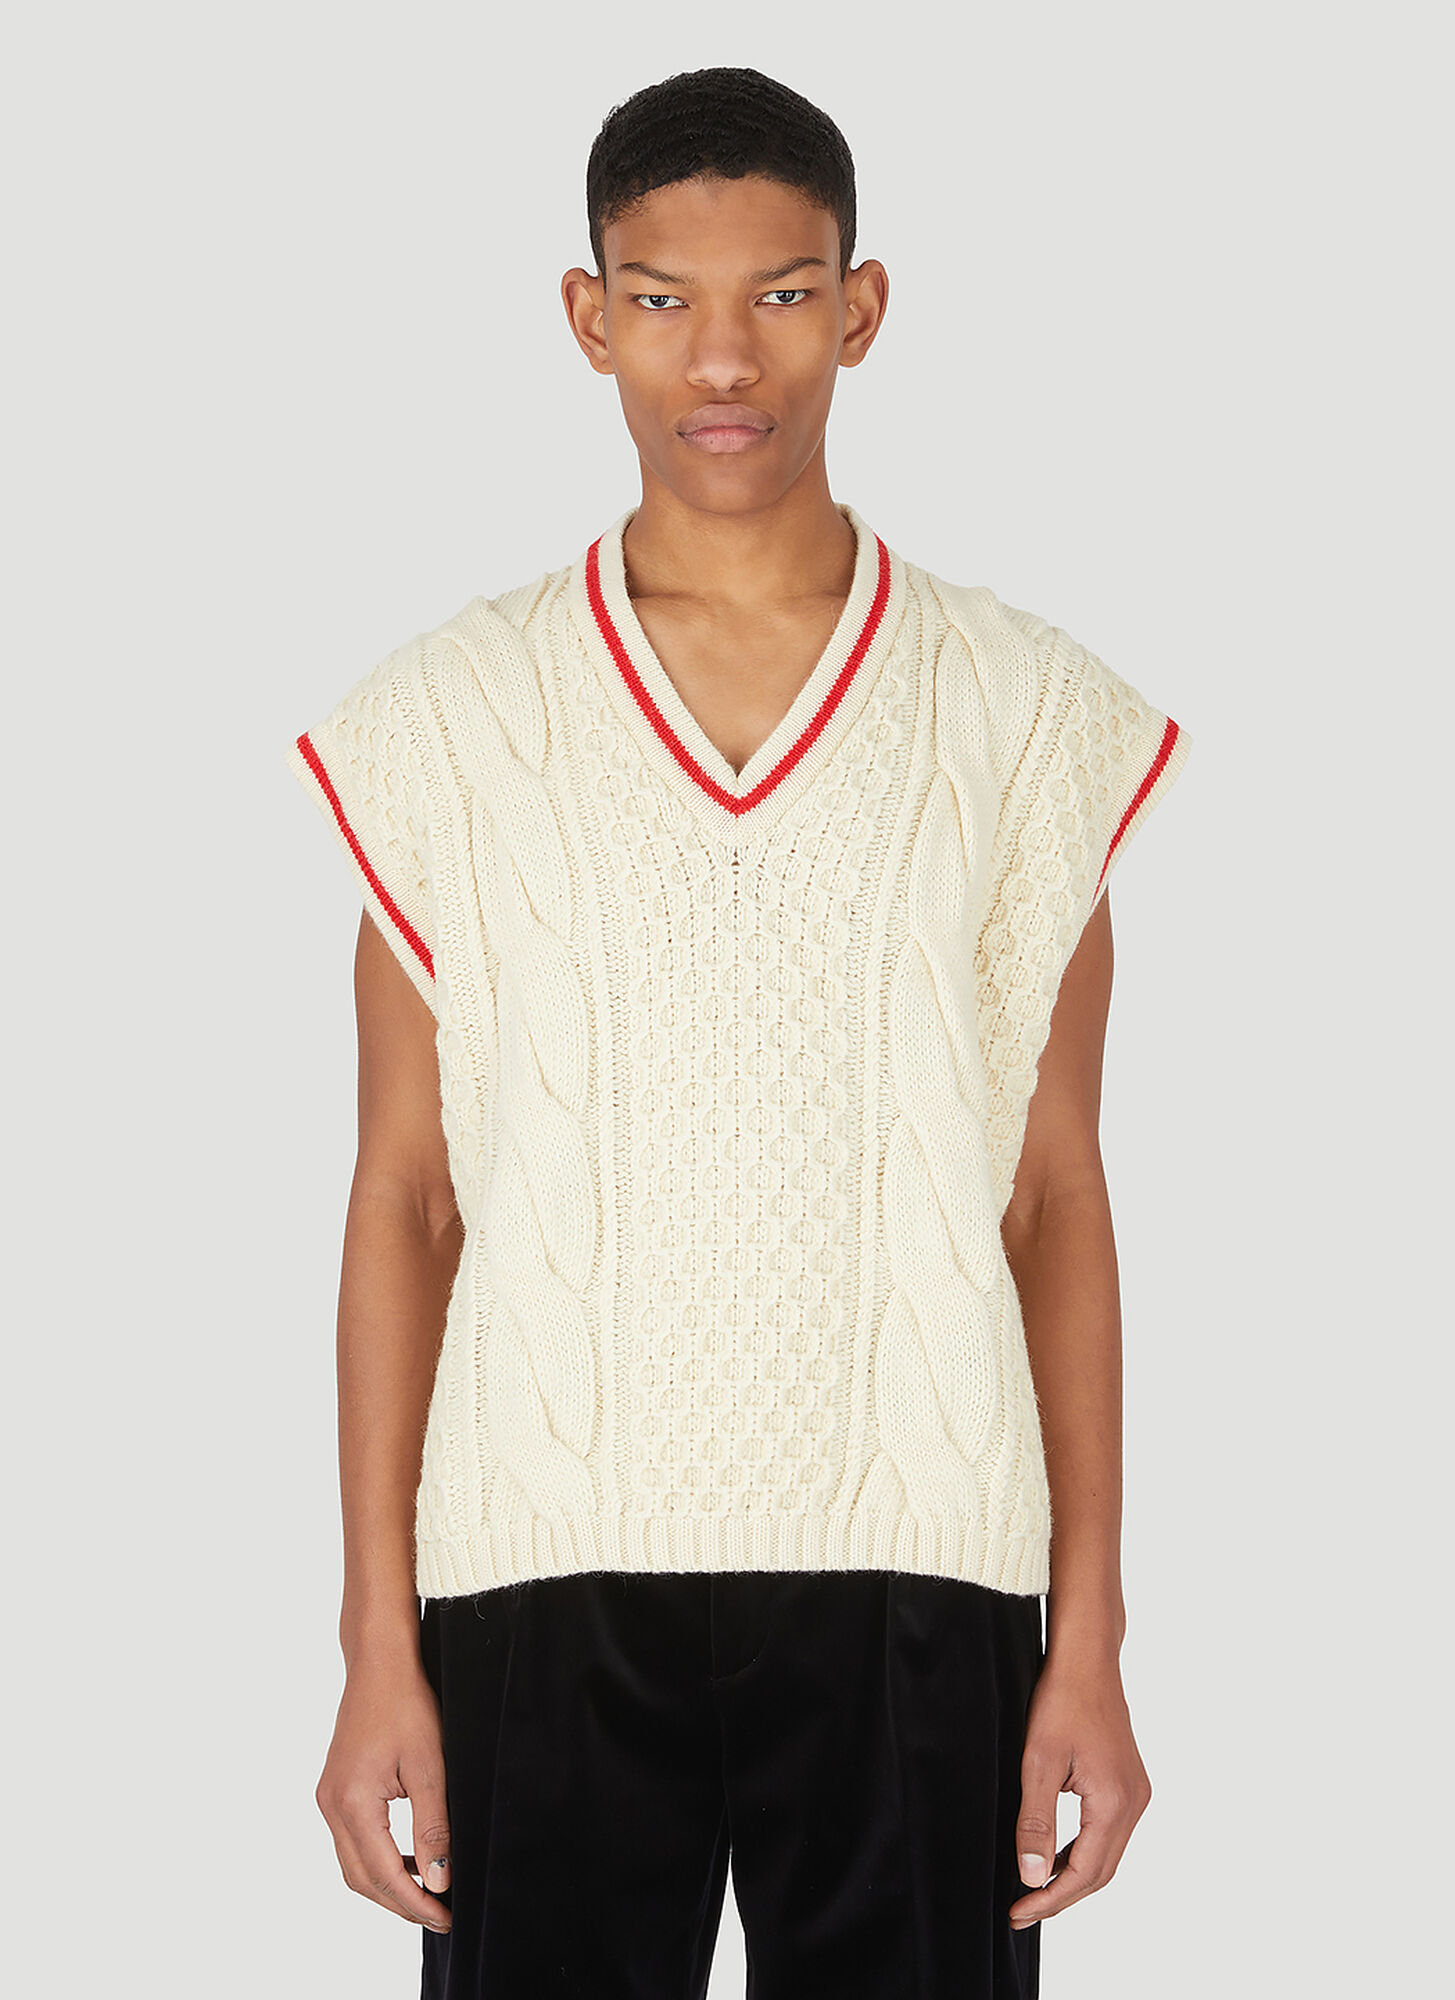 Color Block Sweater Vest, Louis Vuitton Neverfull and Gucci Belt